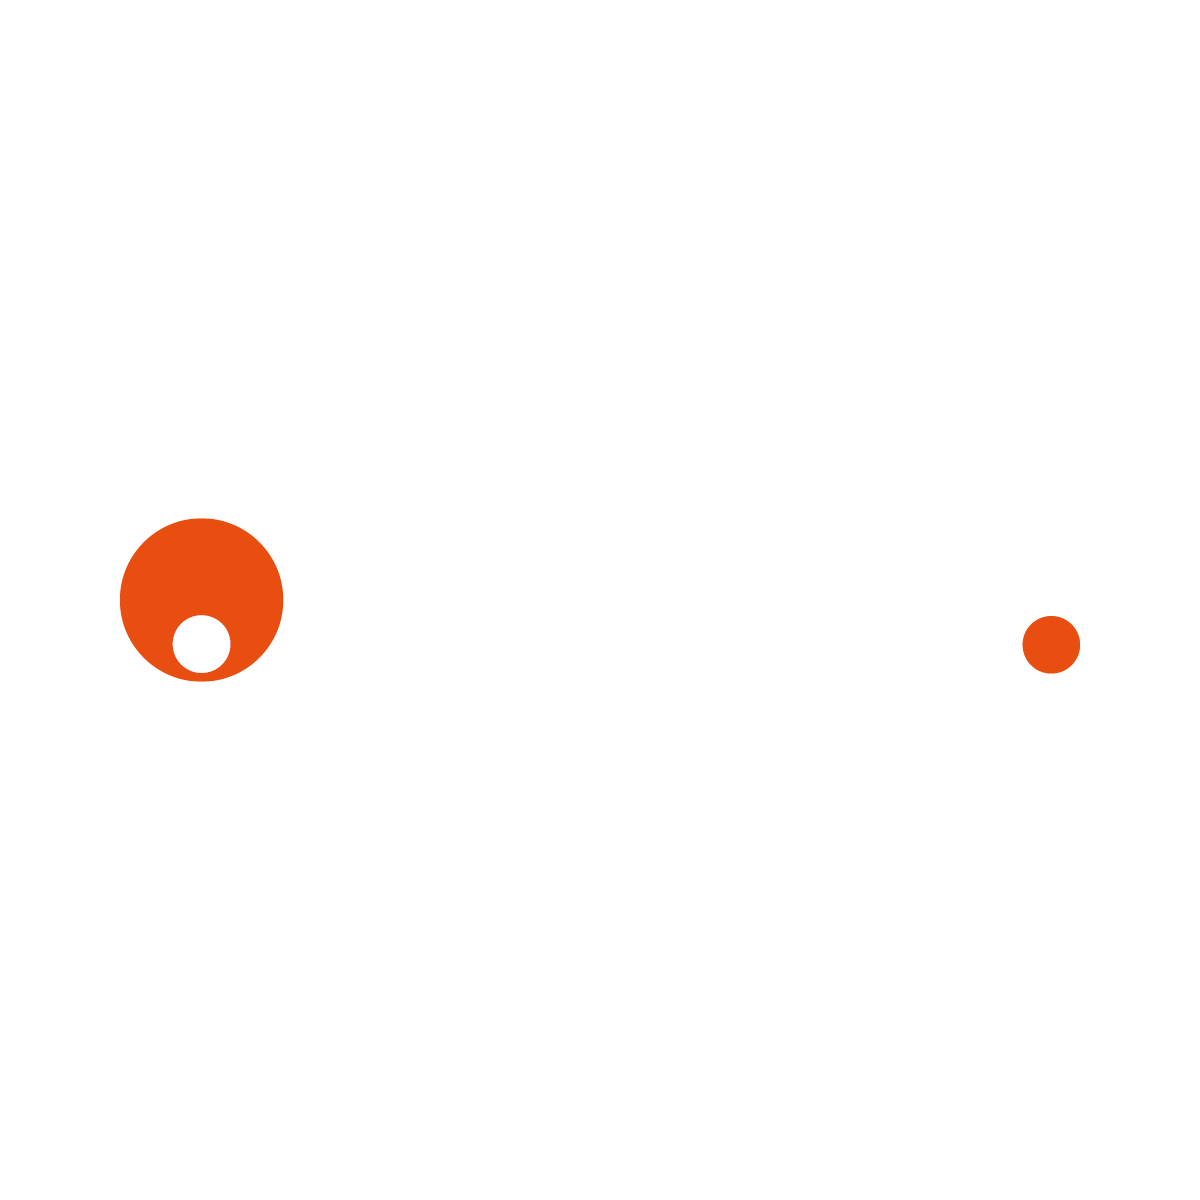 Tecan_logo_white_1200x1200